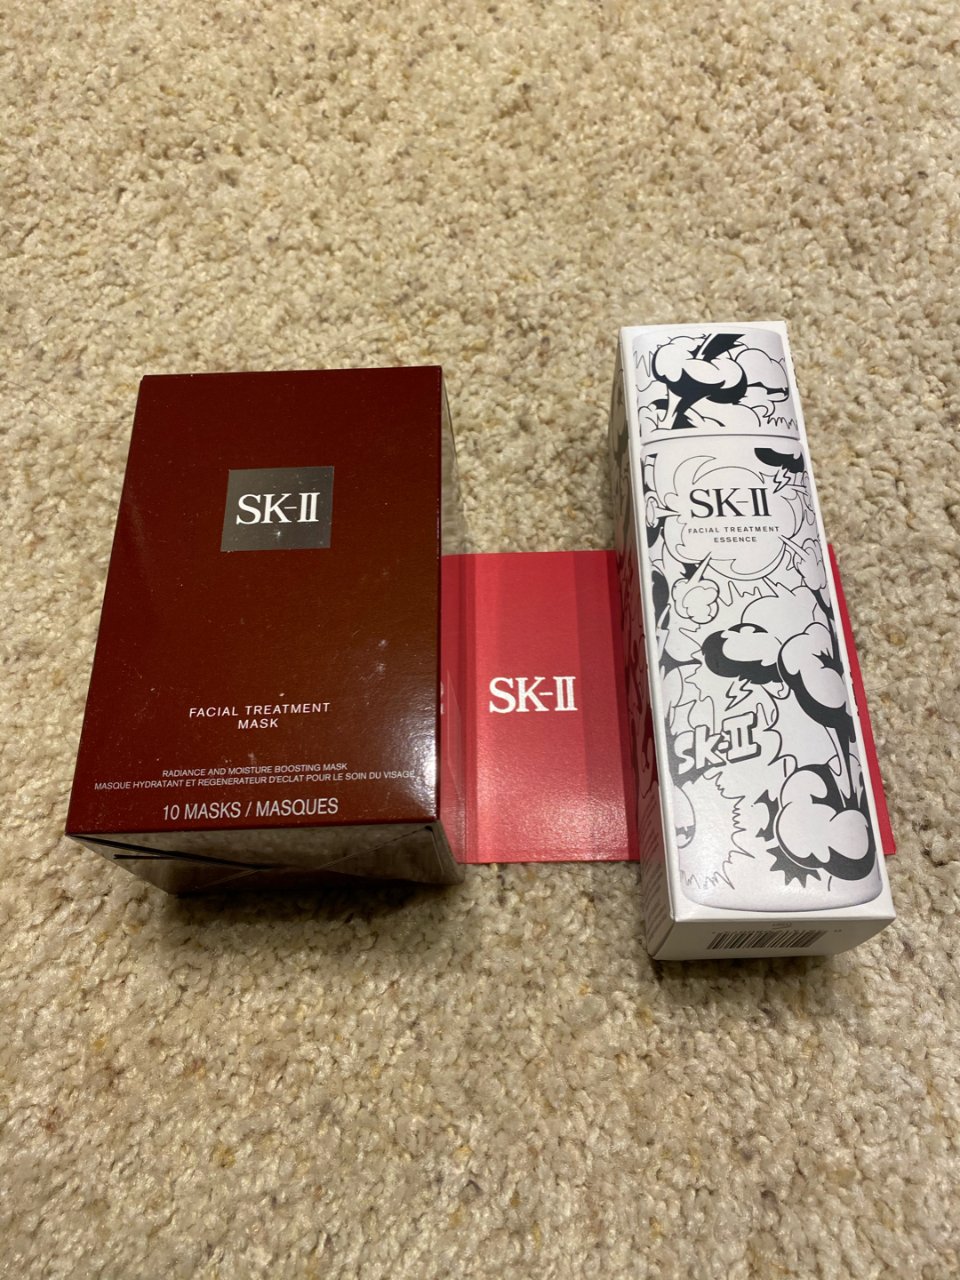 SK-II SKII